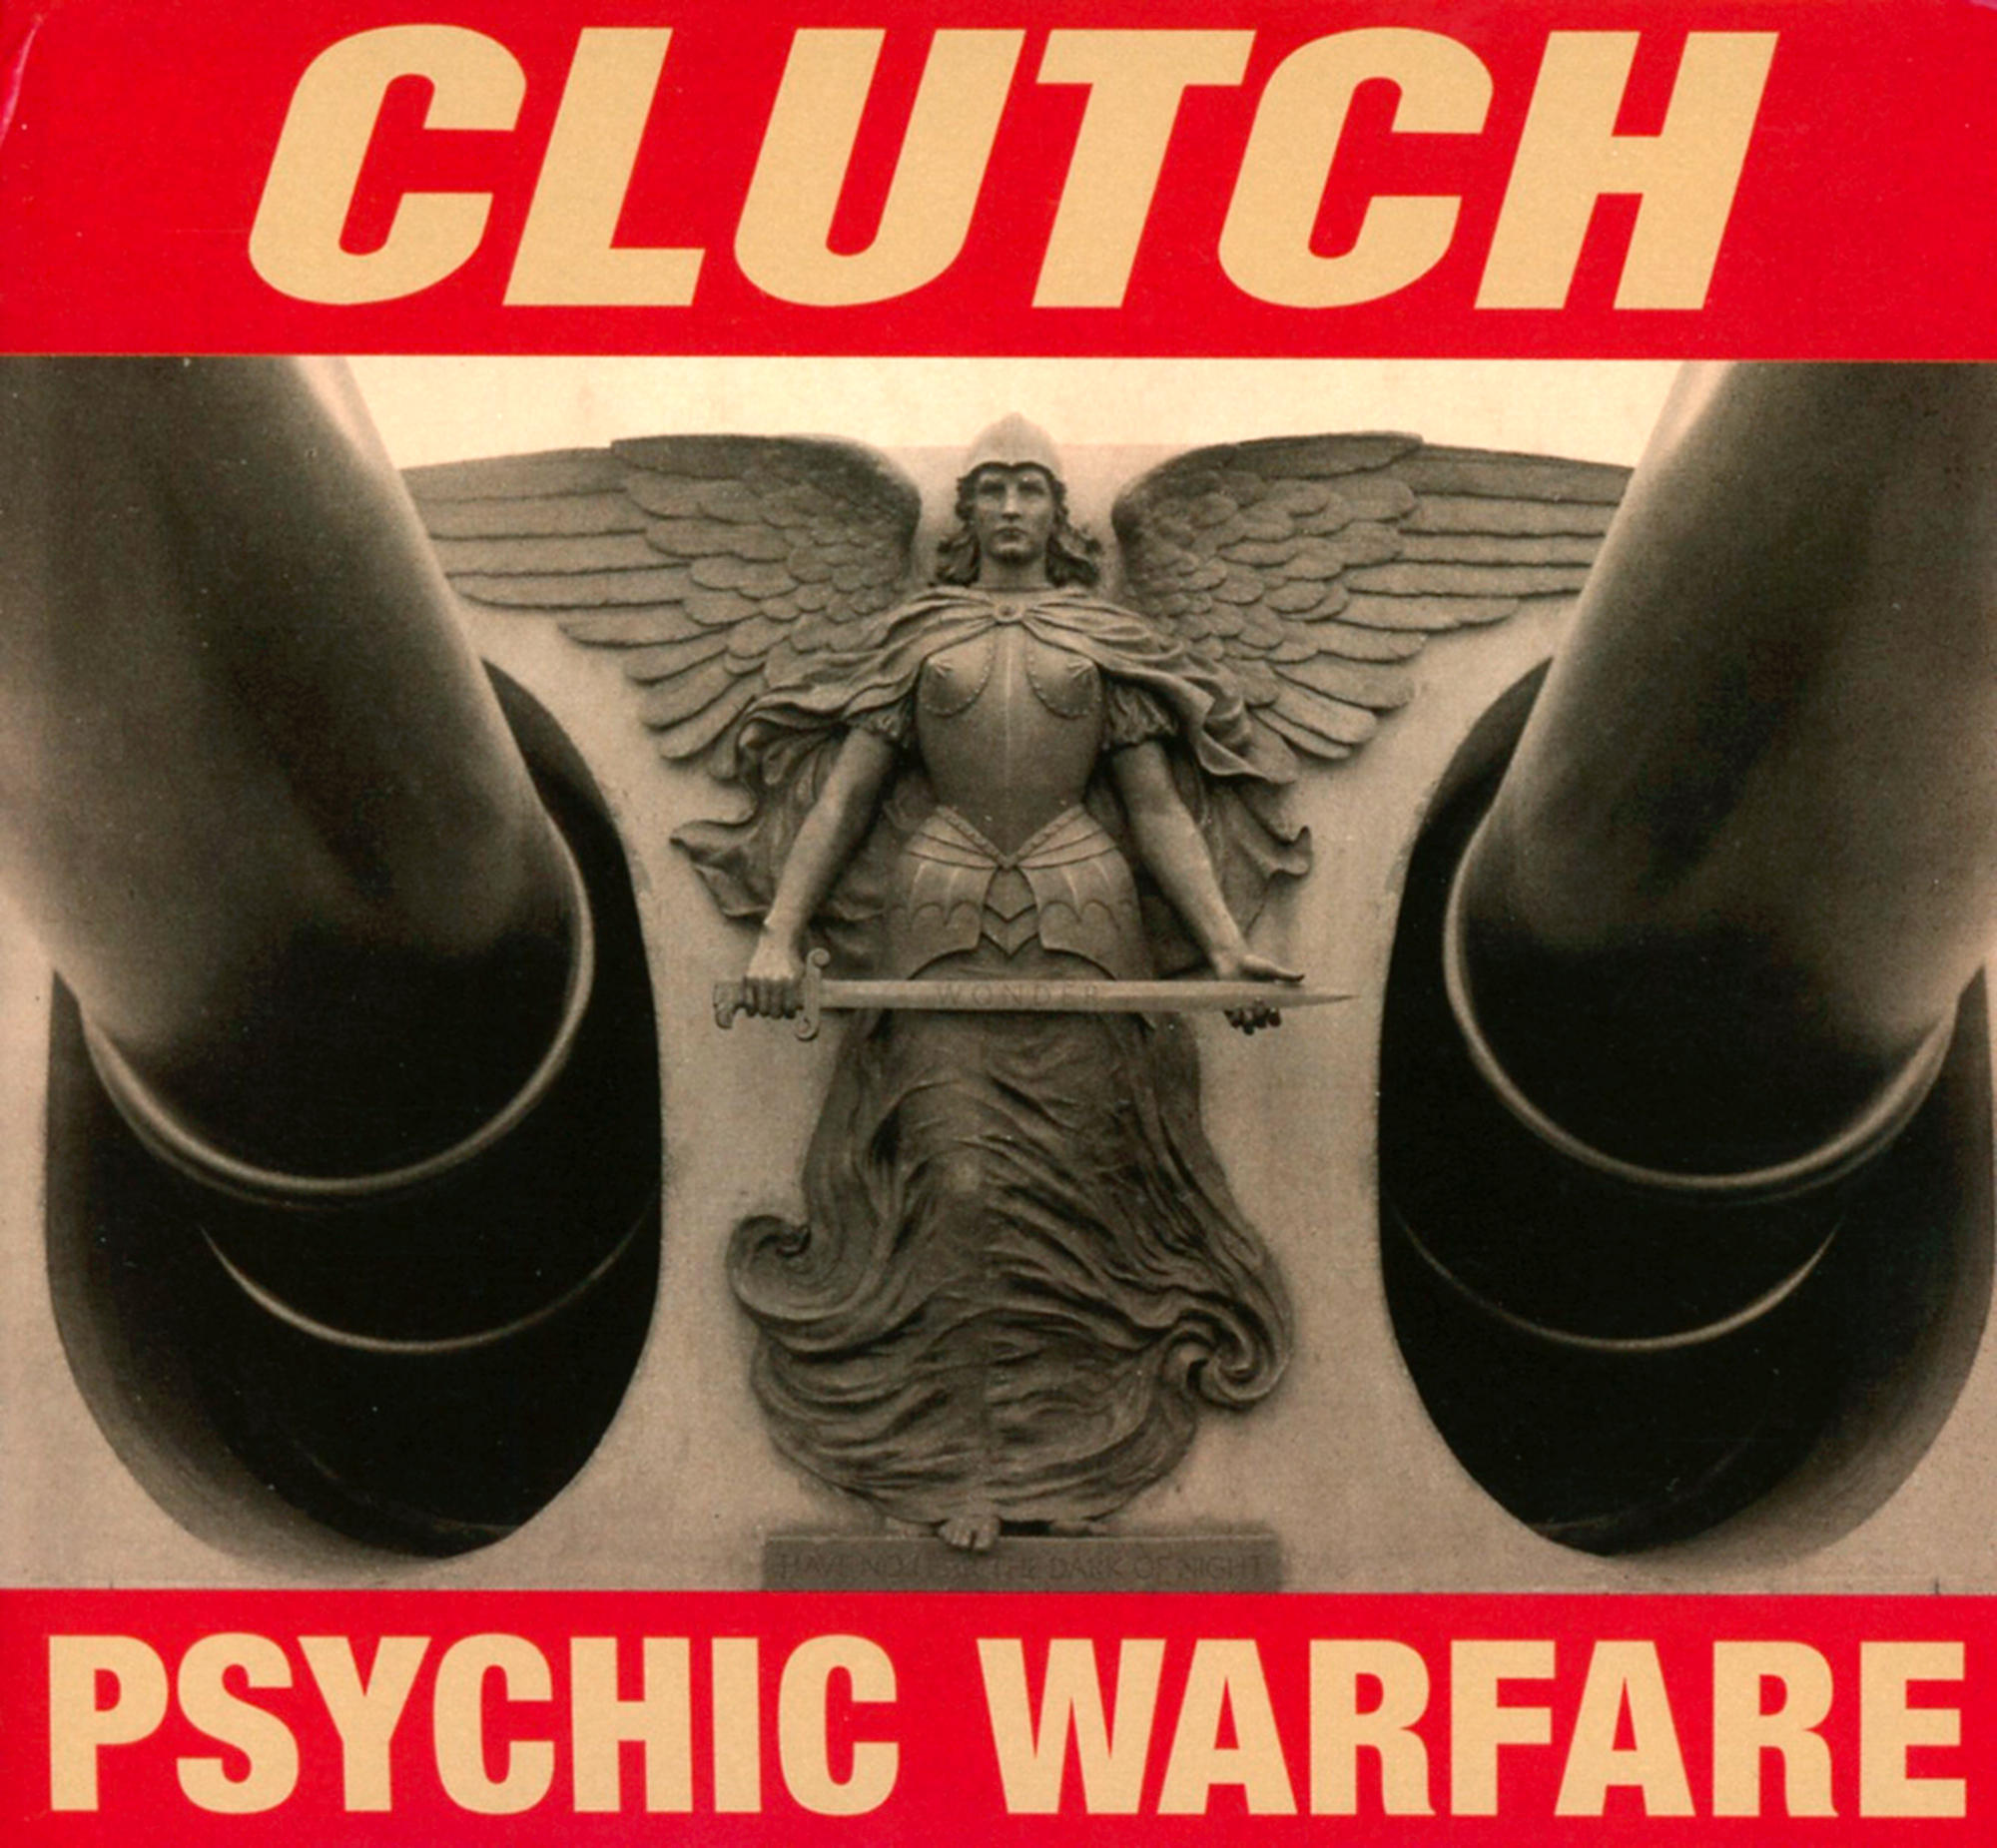 - Gatefold) Warfare Psychic (Lp Clutch - (Vinyl)